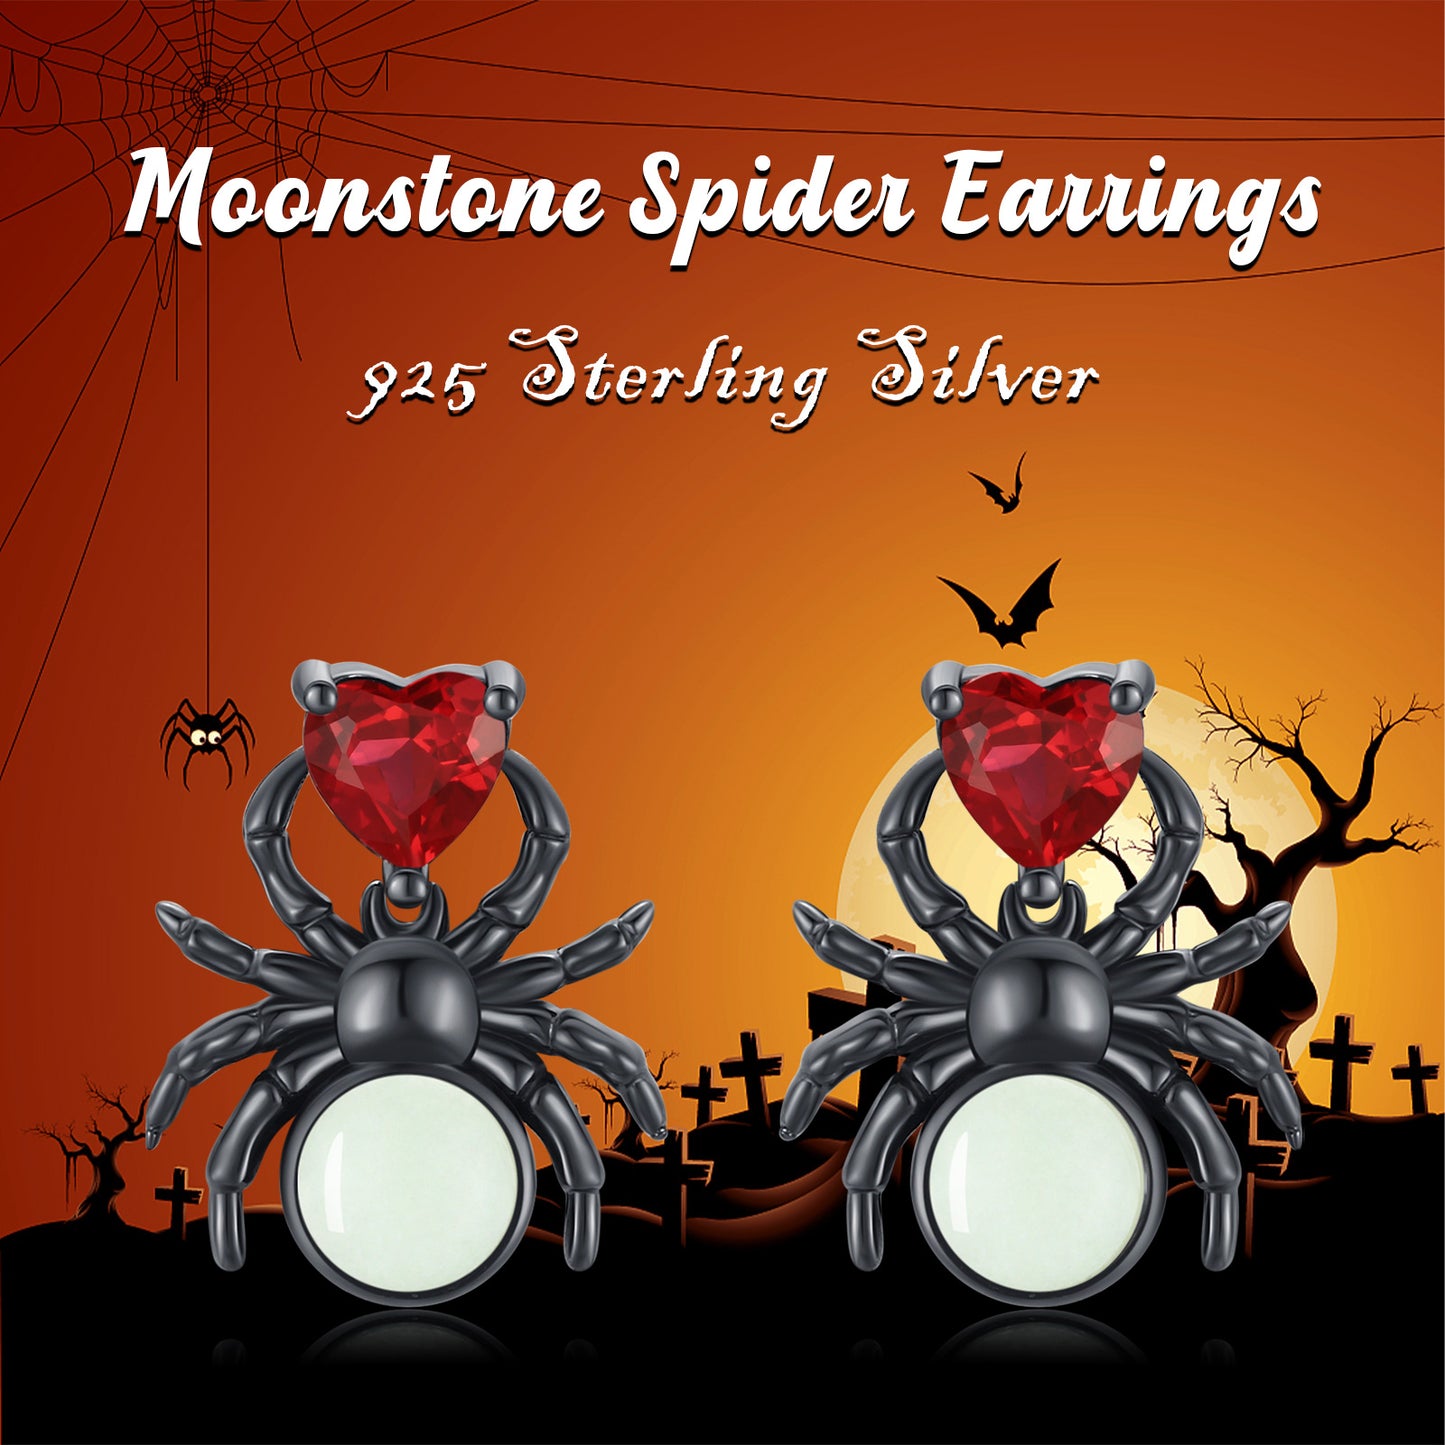 Spider Earrings 925 Sterling Silver Luminous Spider Stud Earrings for Women Glowing in the Dark Spider Jewelry Horror Animal Earrings